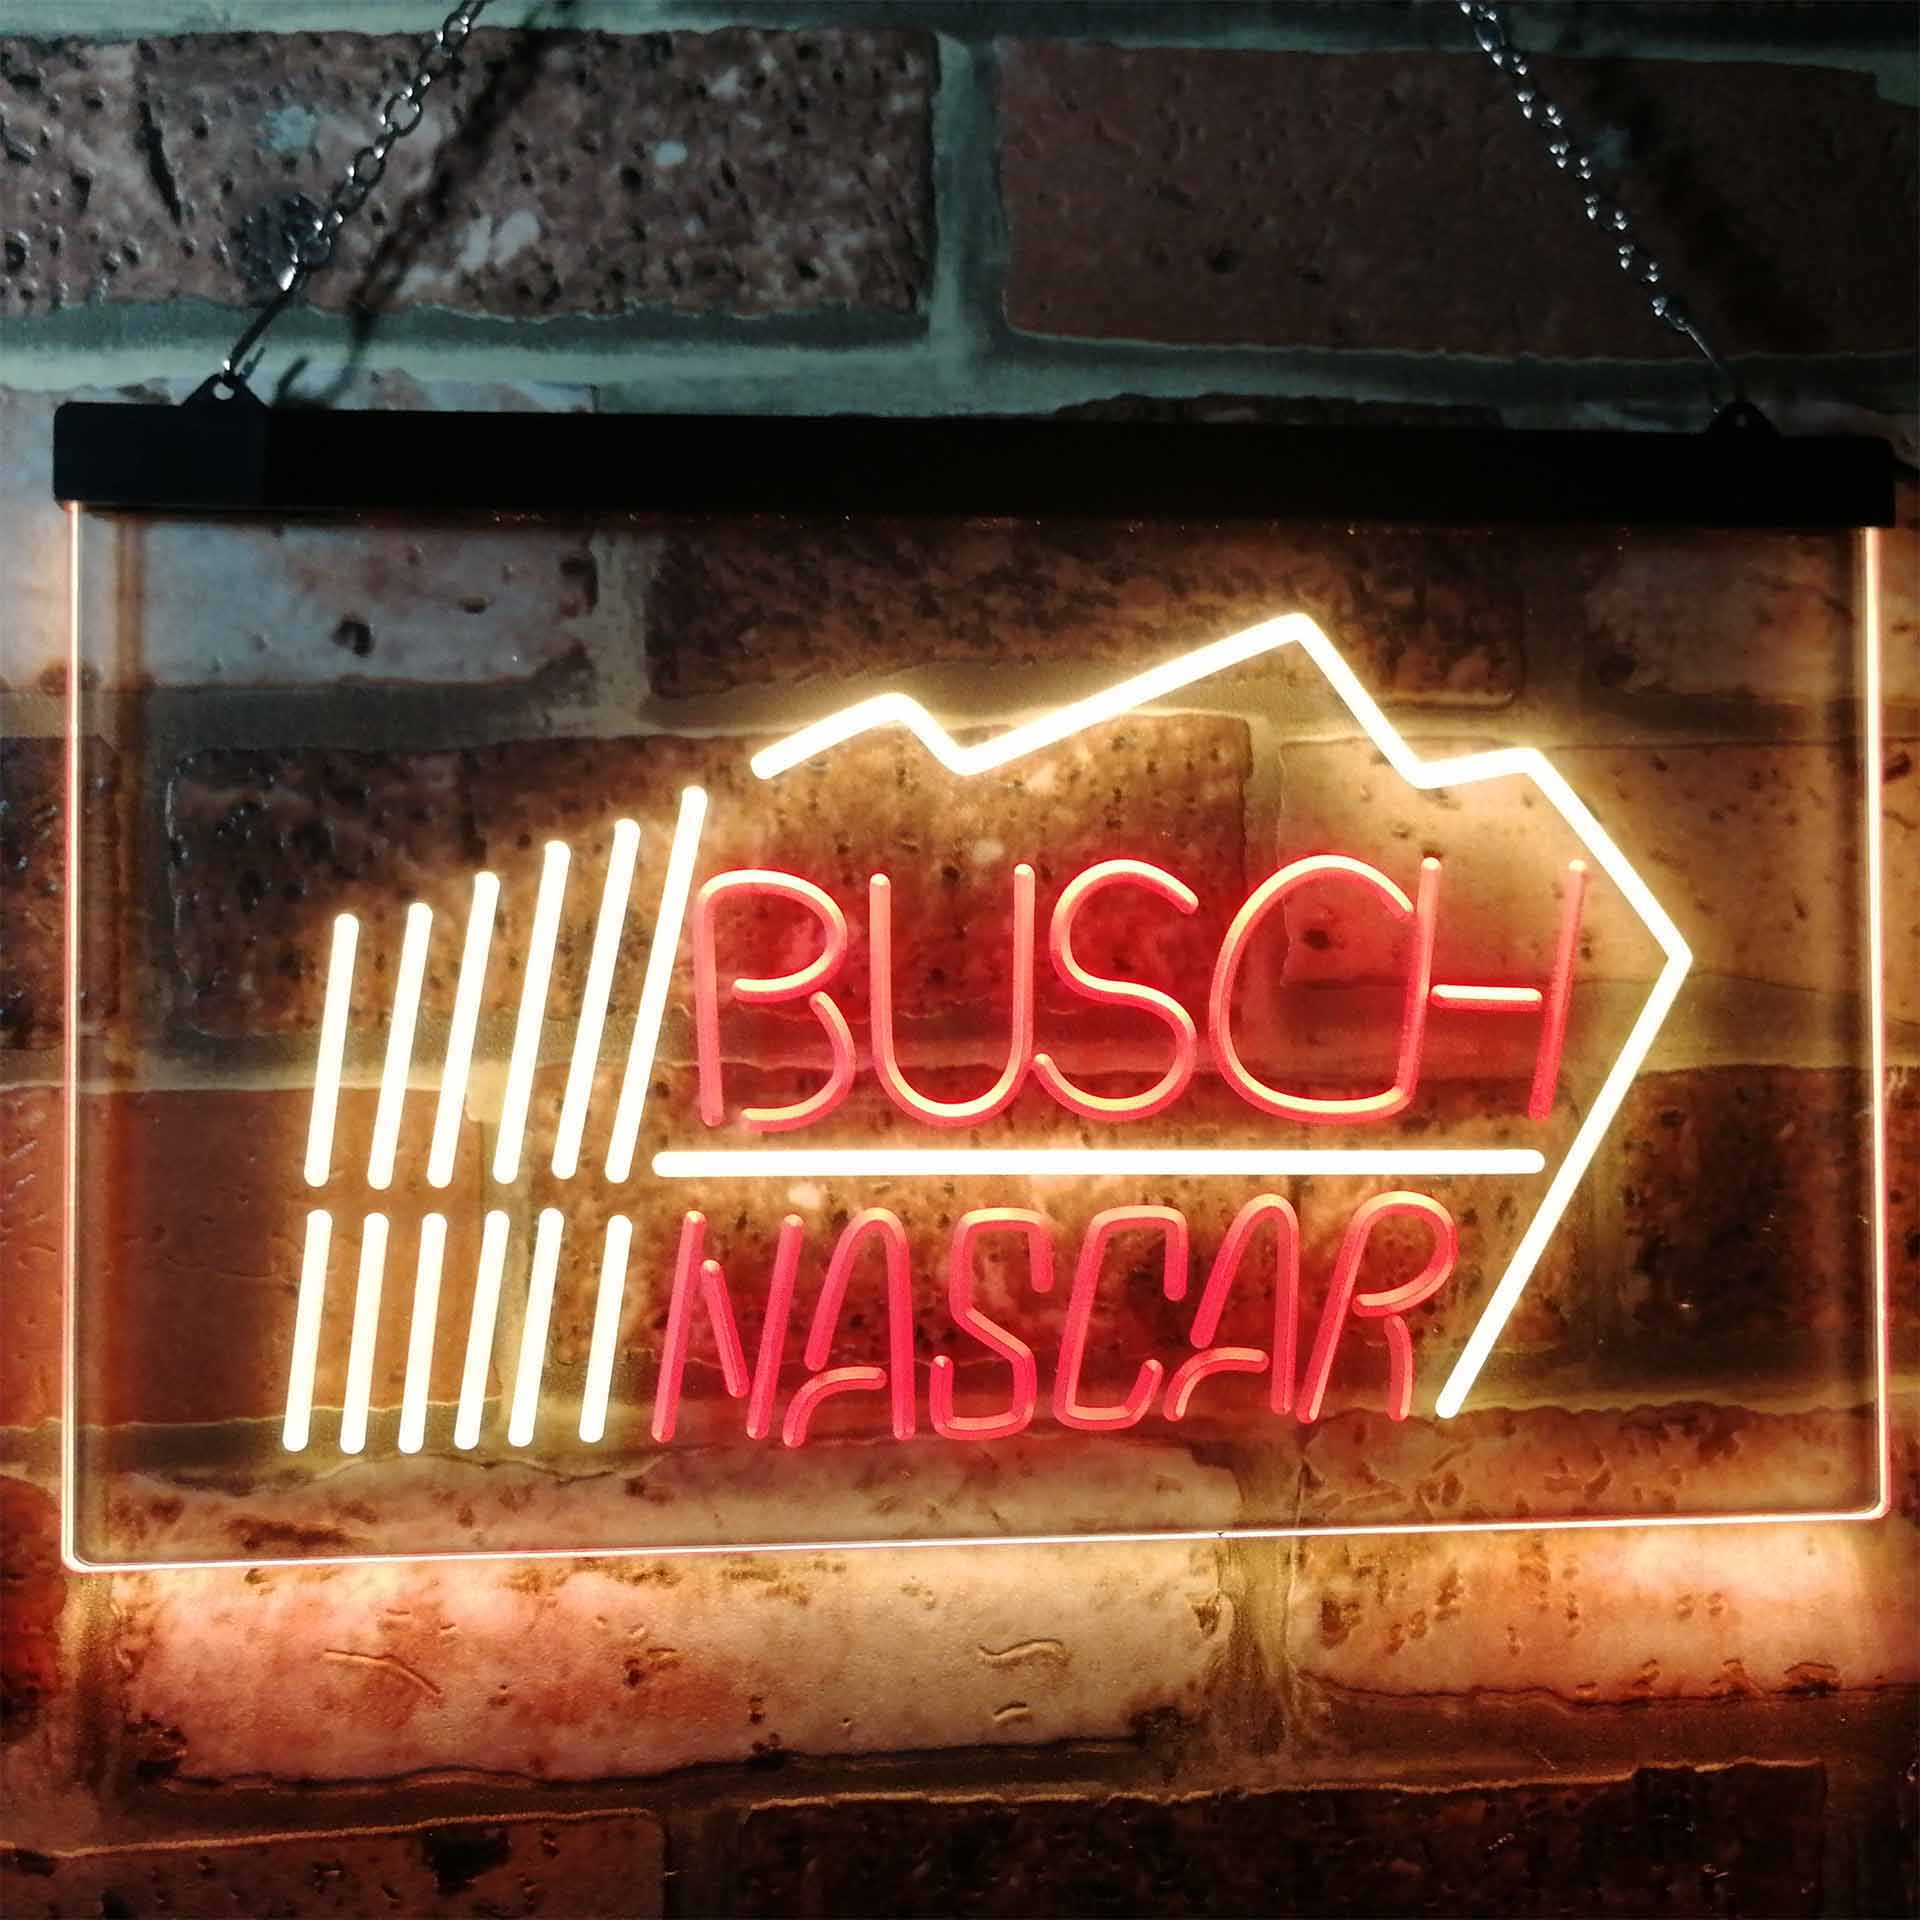 Busch Nascar Beer Racing Car Bar LED Neon Sign